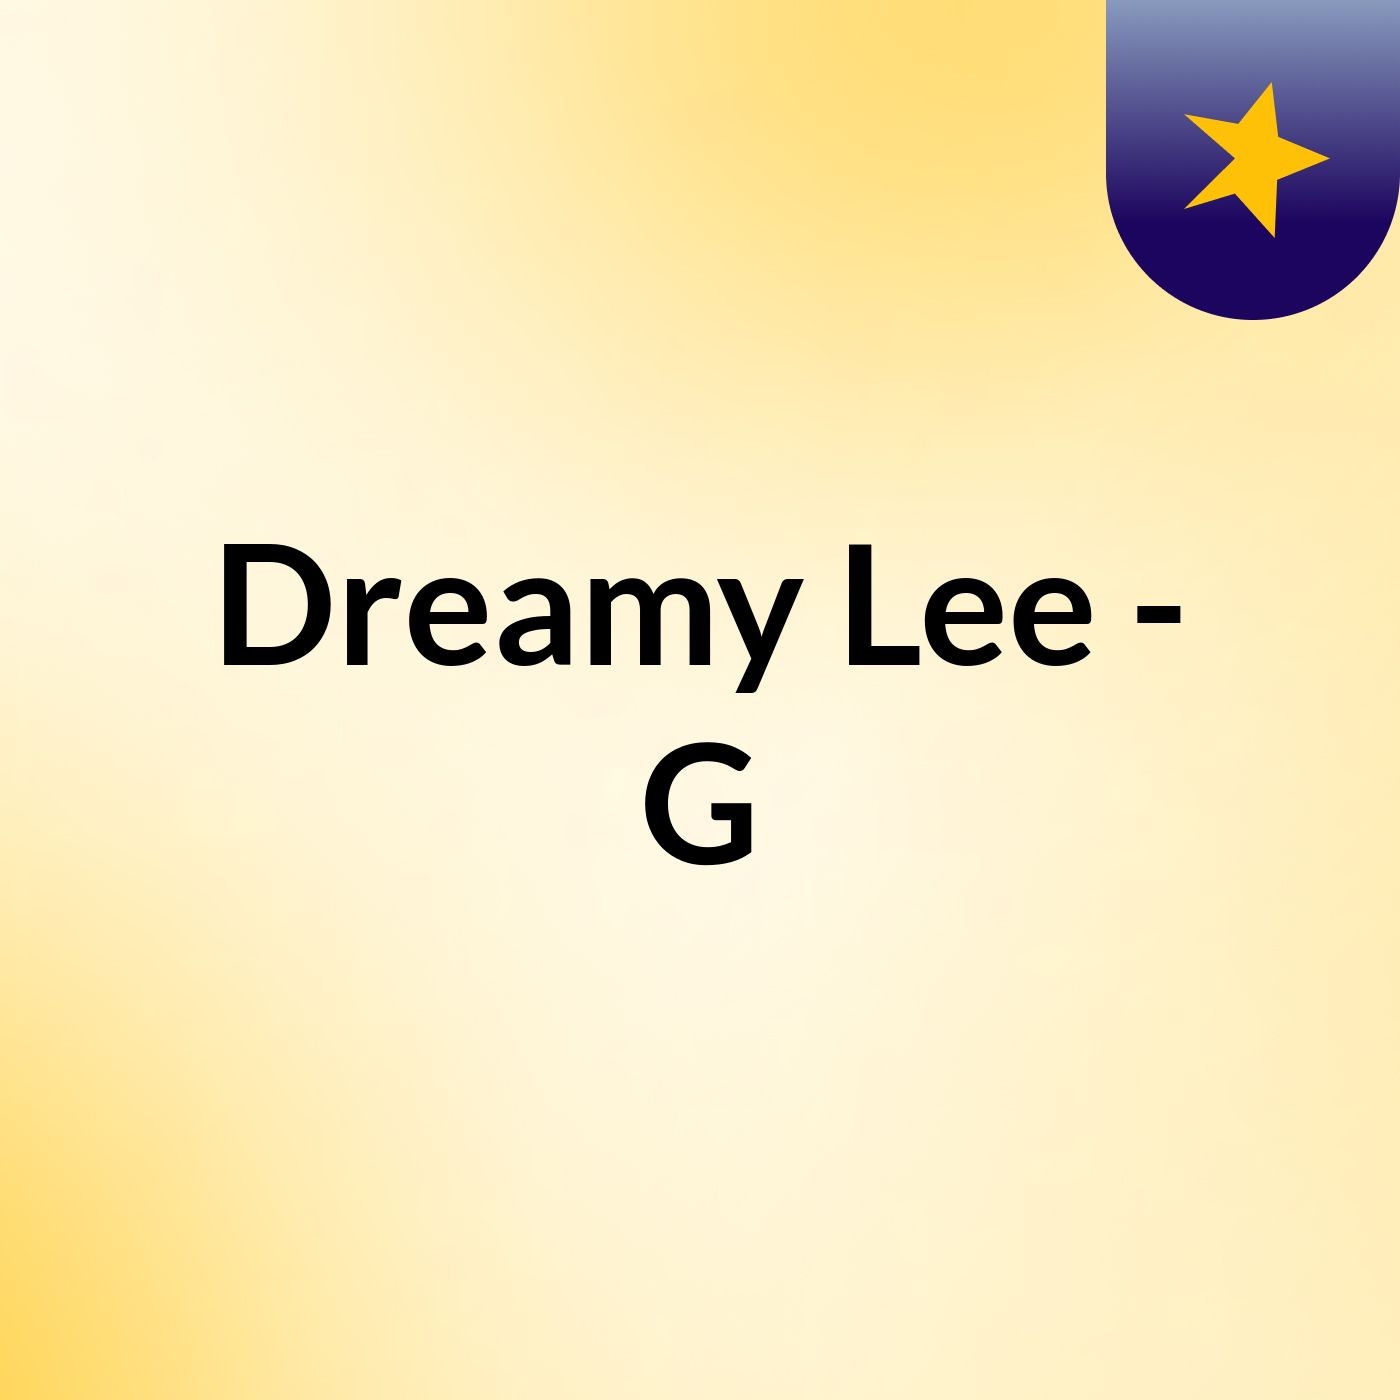 Dreamy Lee - G